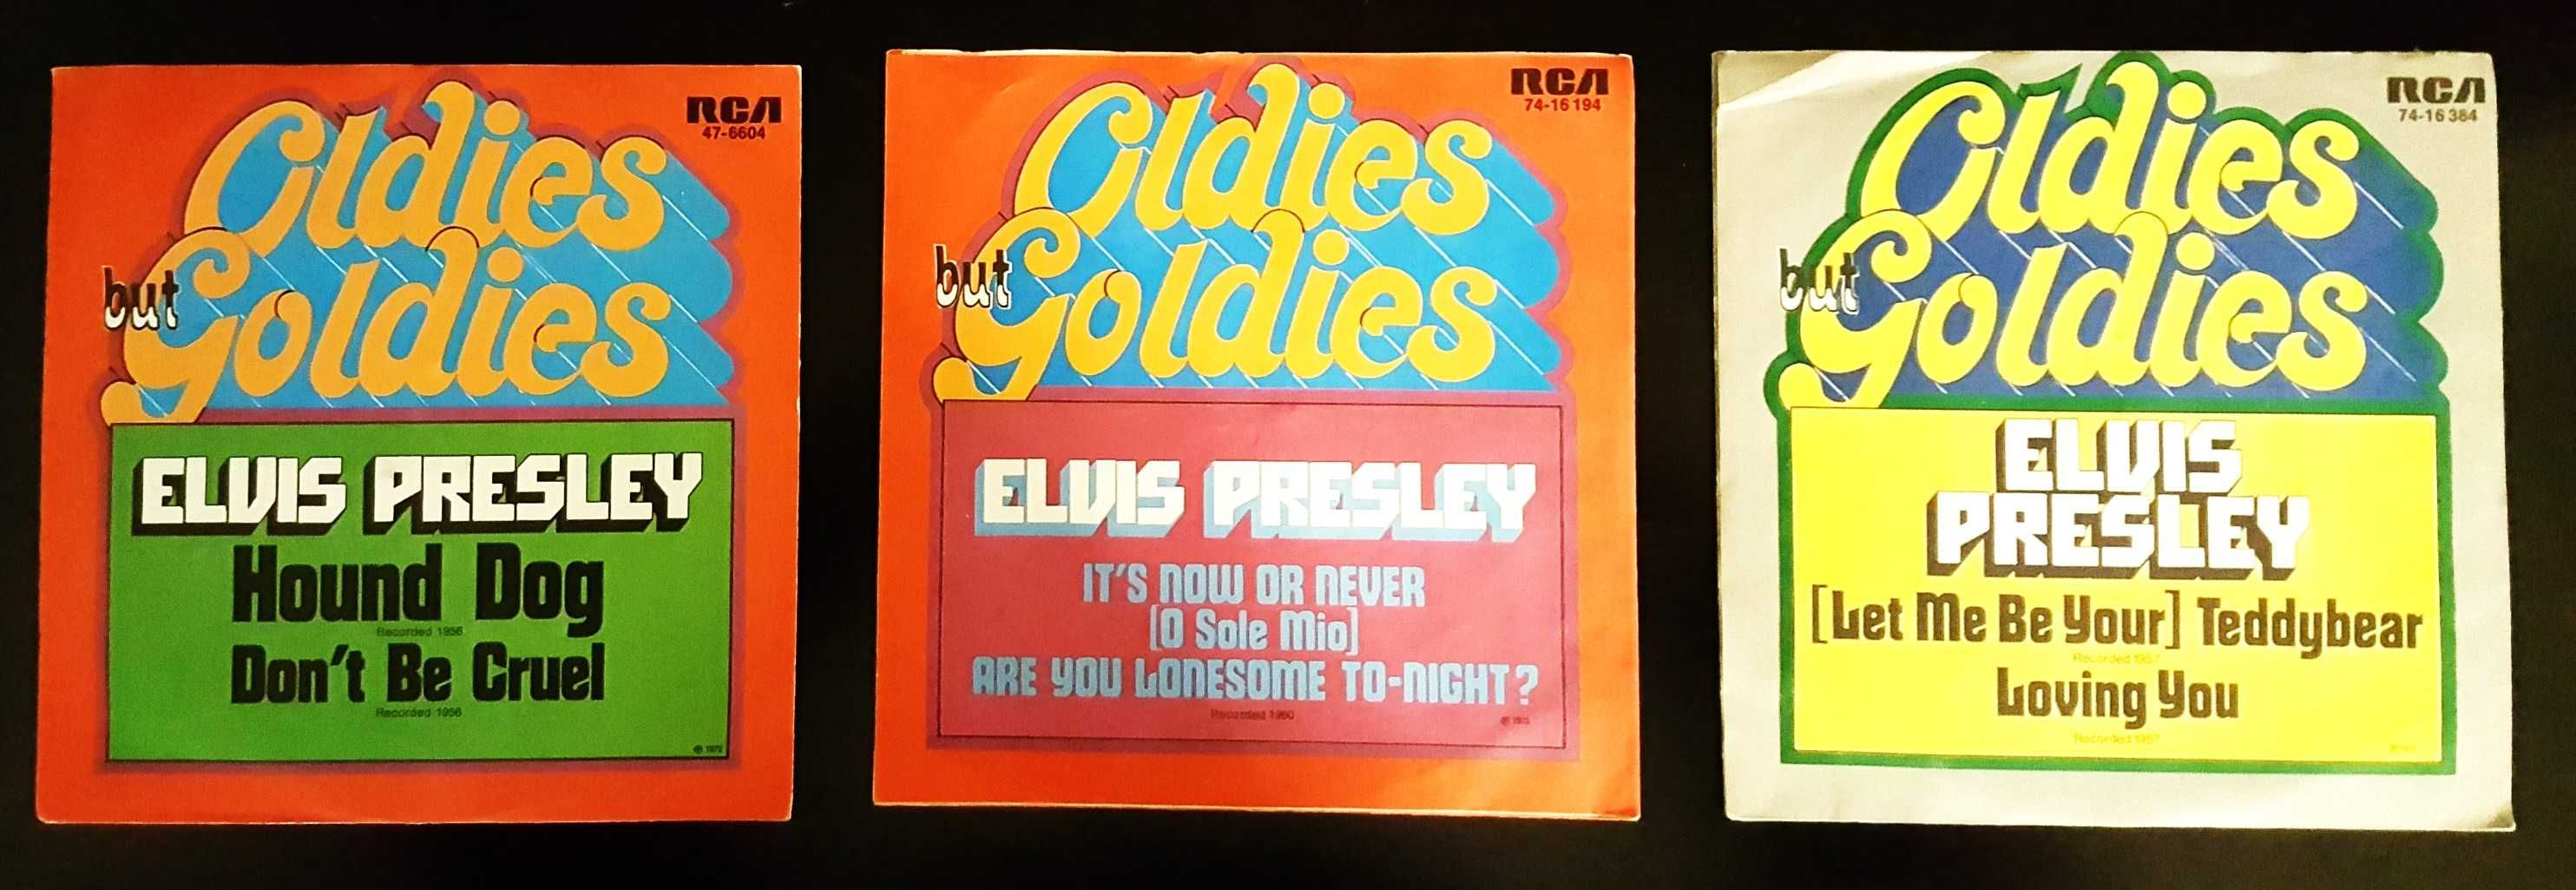 Płyta winylowa zestaw singli Elvis Presley ,,Goldies bat Goldies,,